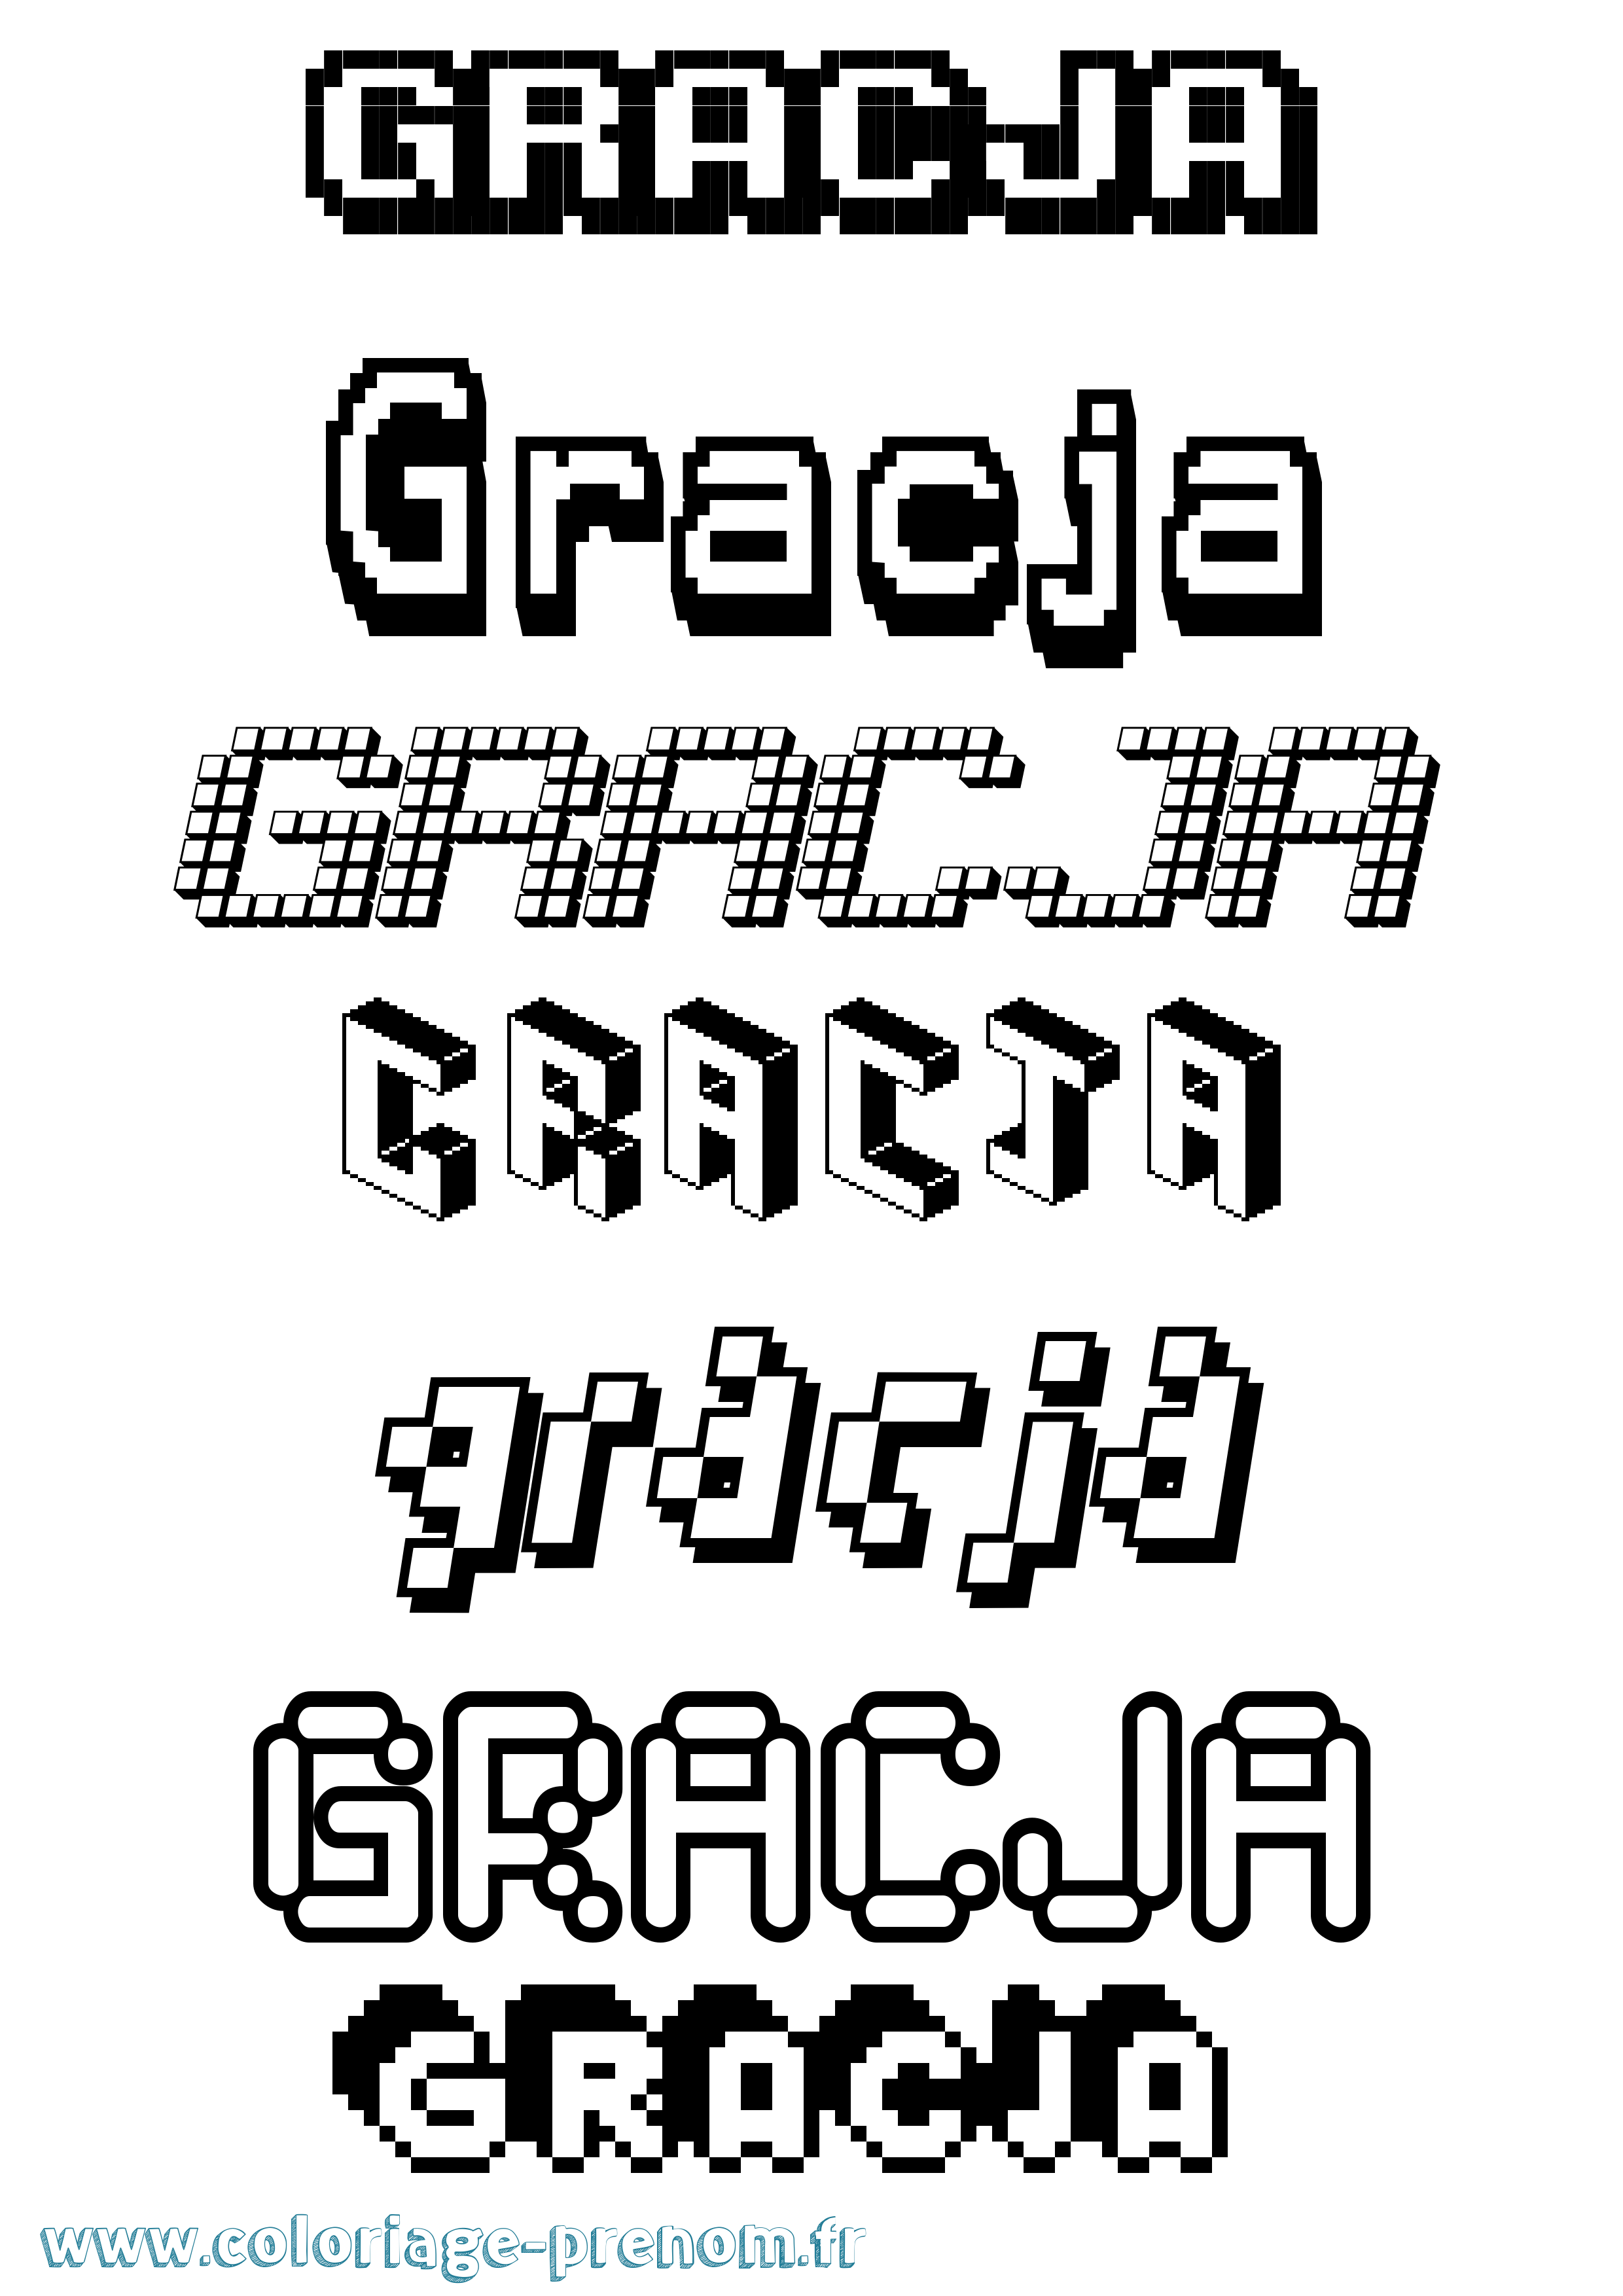 Coloriage prénom Gracja Pixel